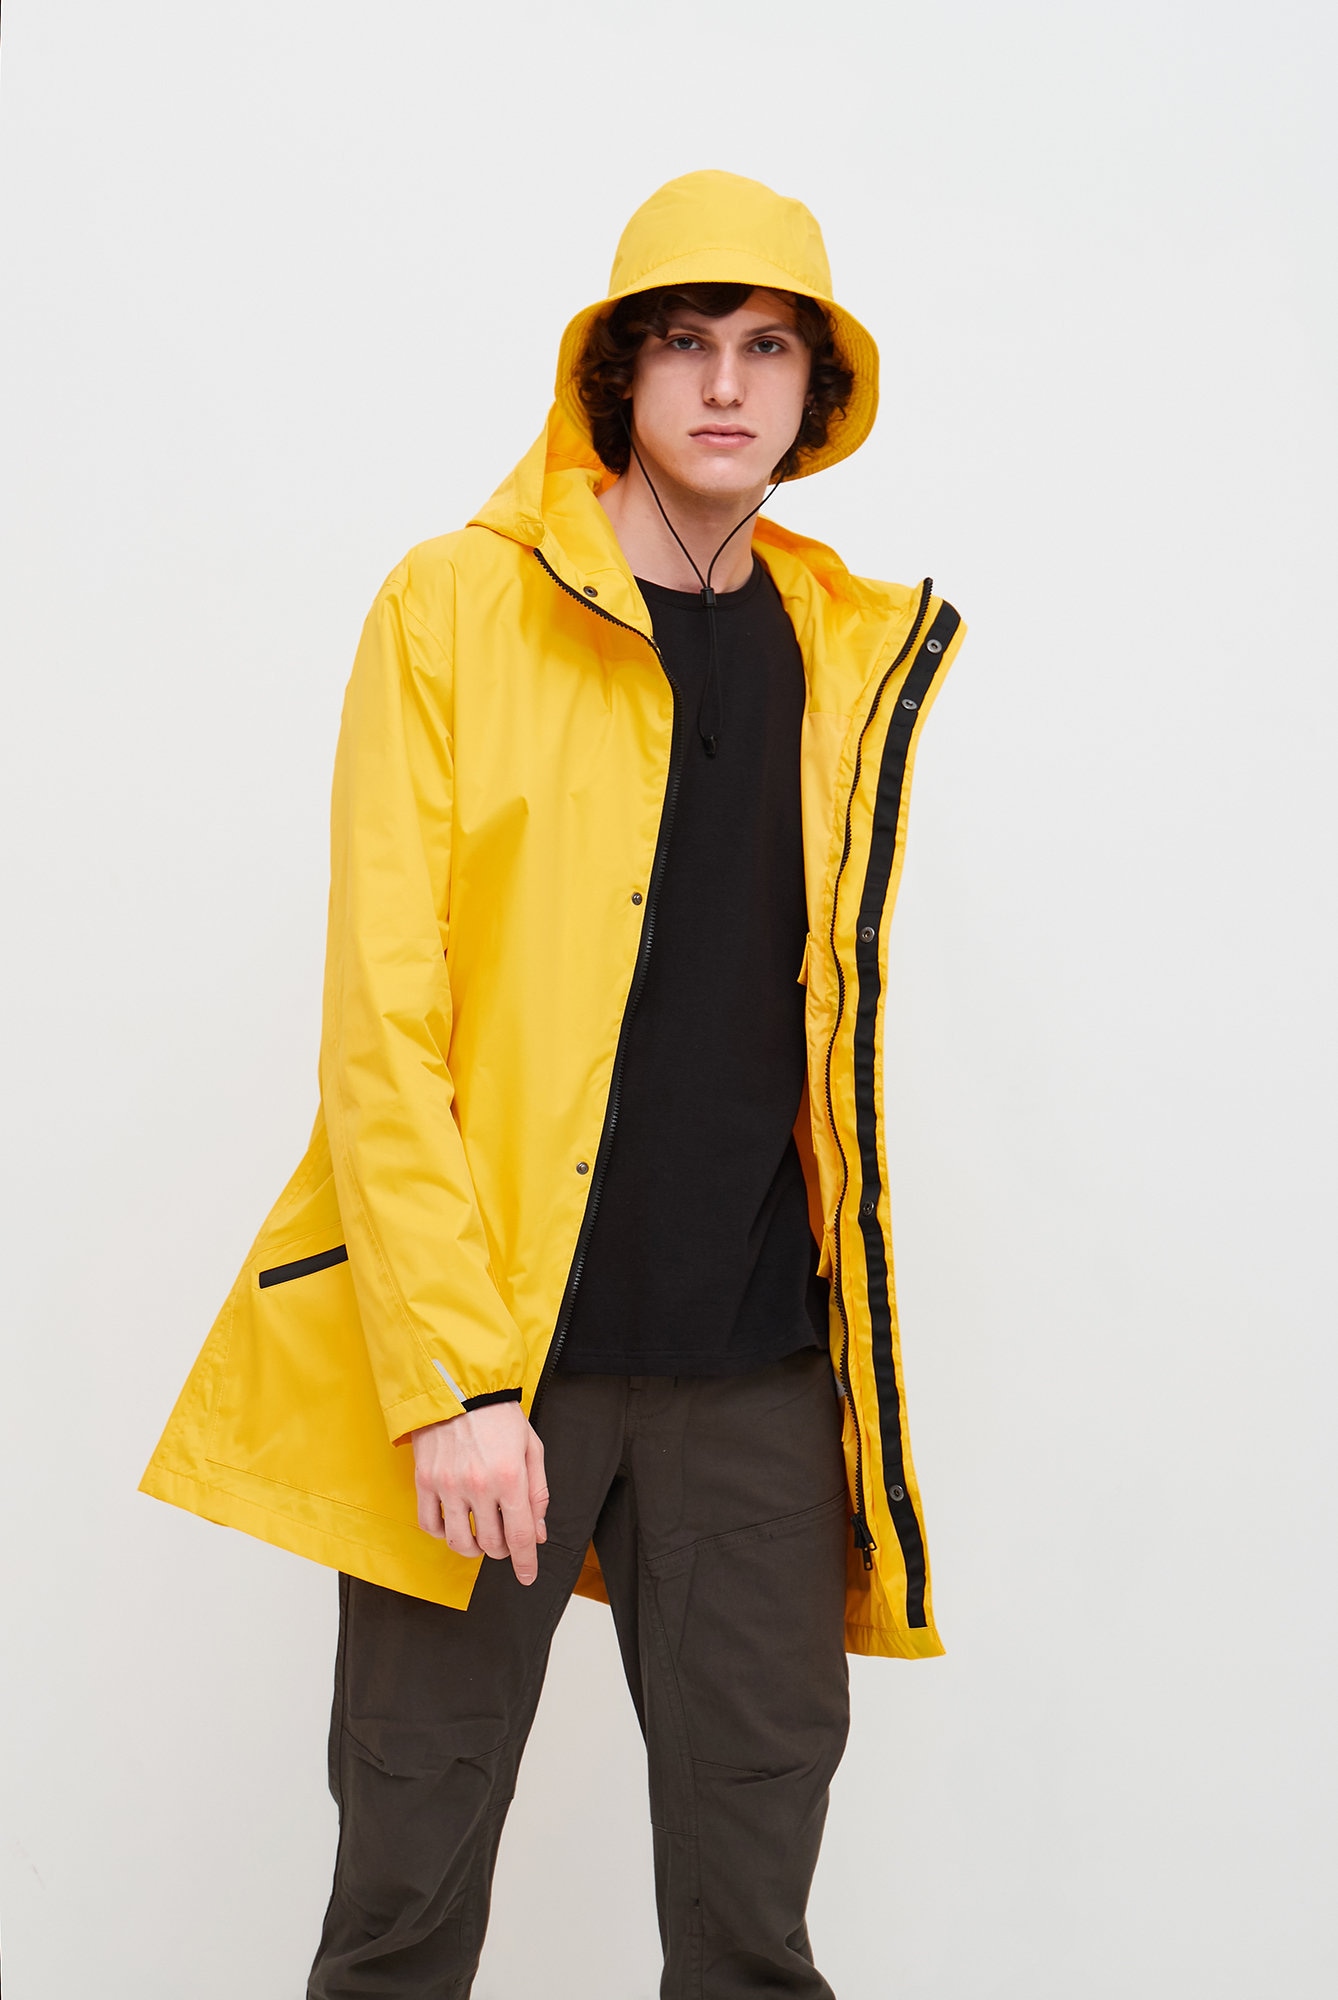 Yellow Rain Jacket for Traveling Men Raincoat With Hood - Etsy